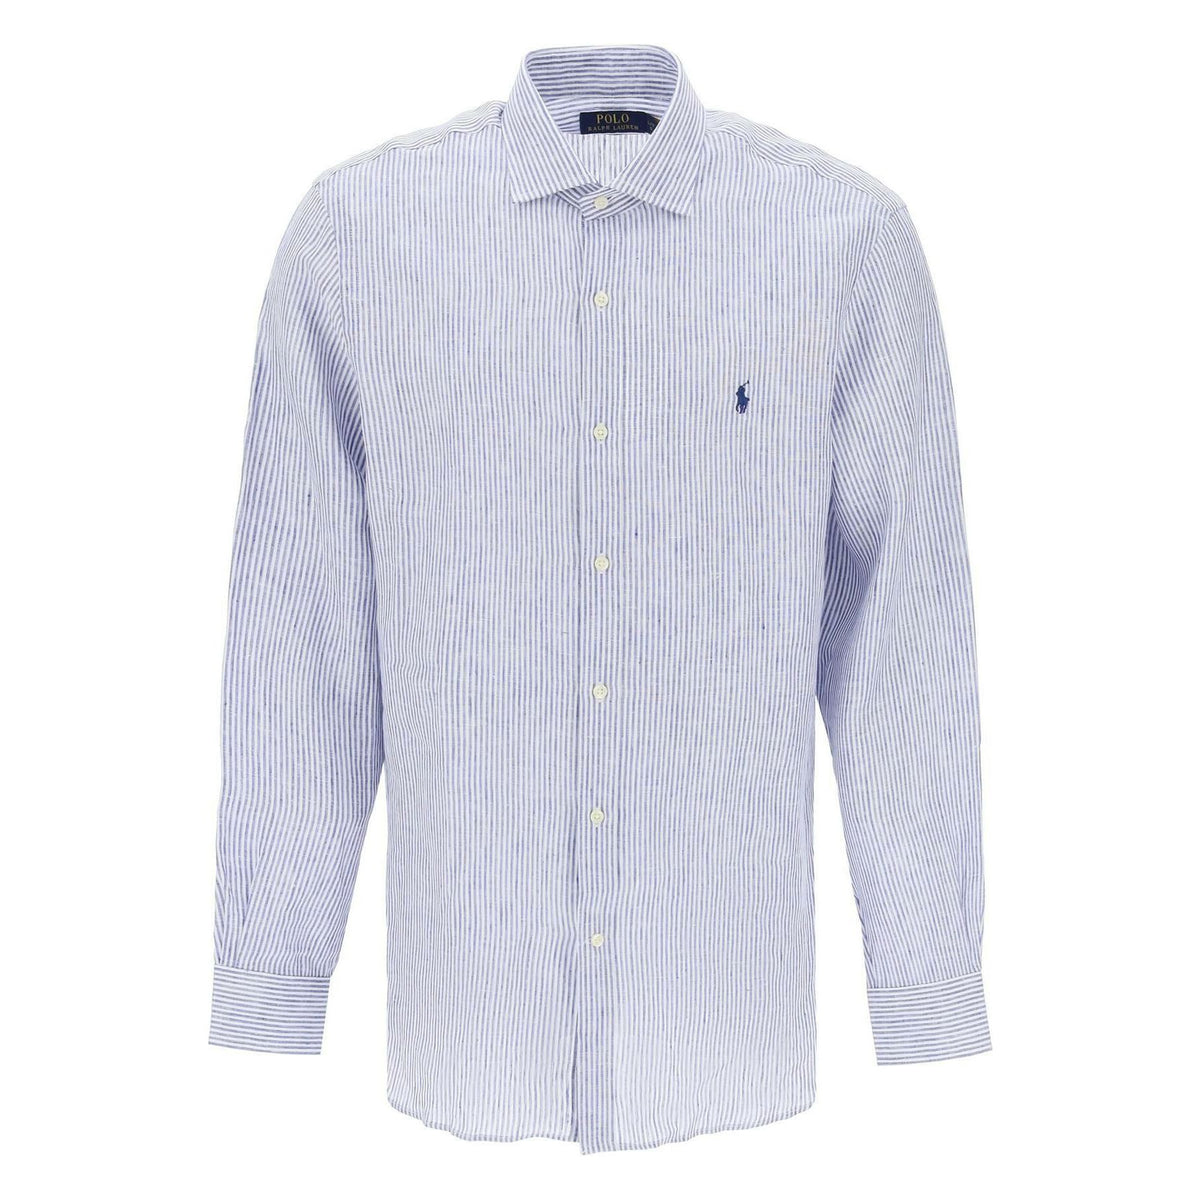 POLO RALPH LAUREN - Royal White and Blue Striped Slim-Fit Linen Shirt - JOHN JULIA